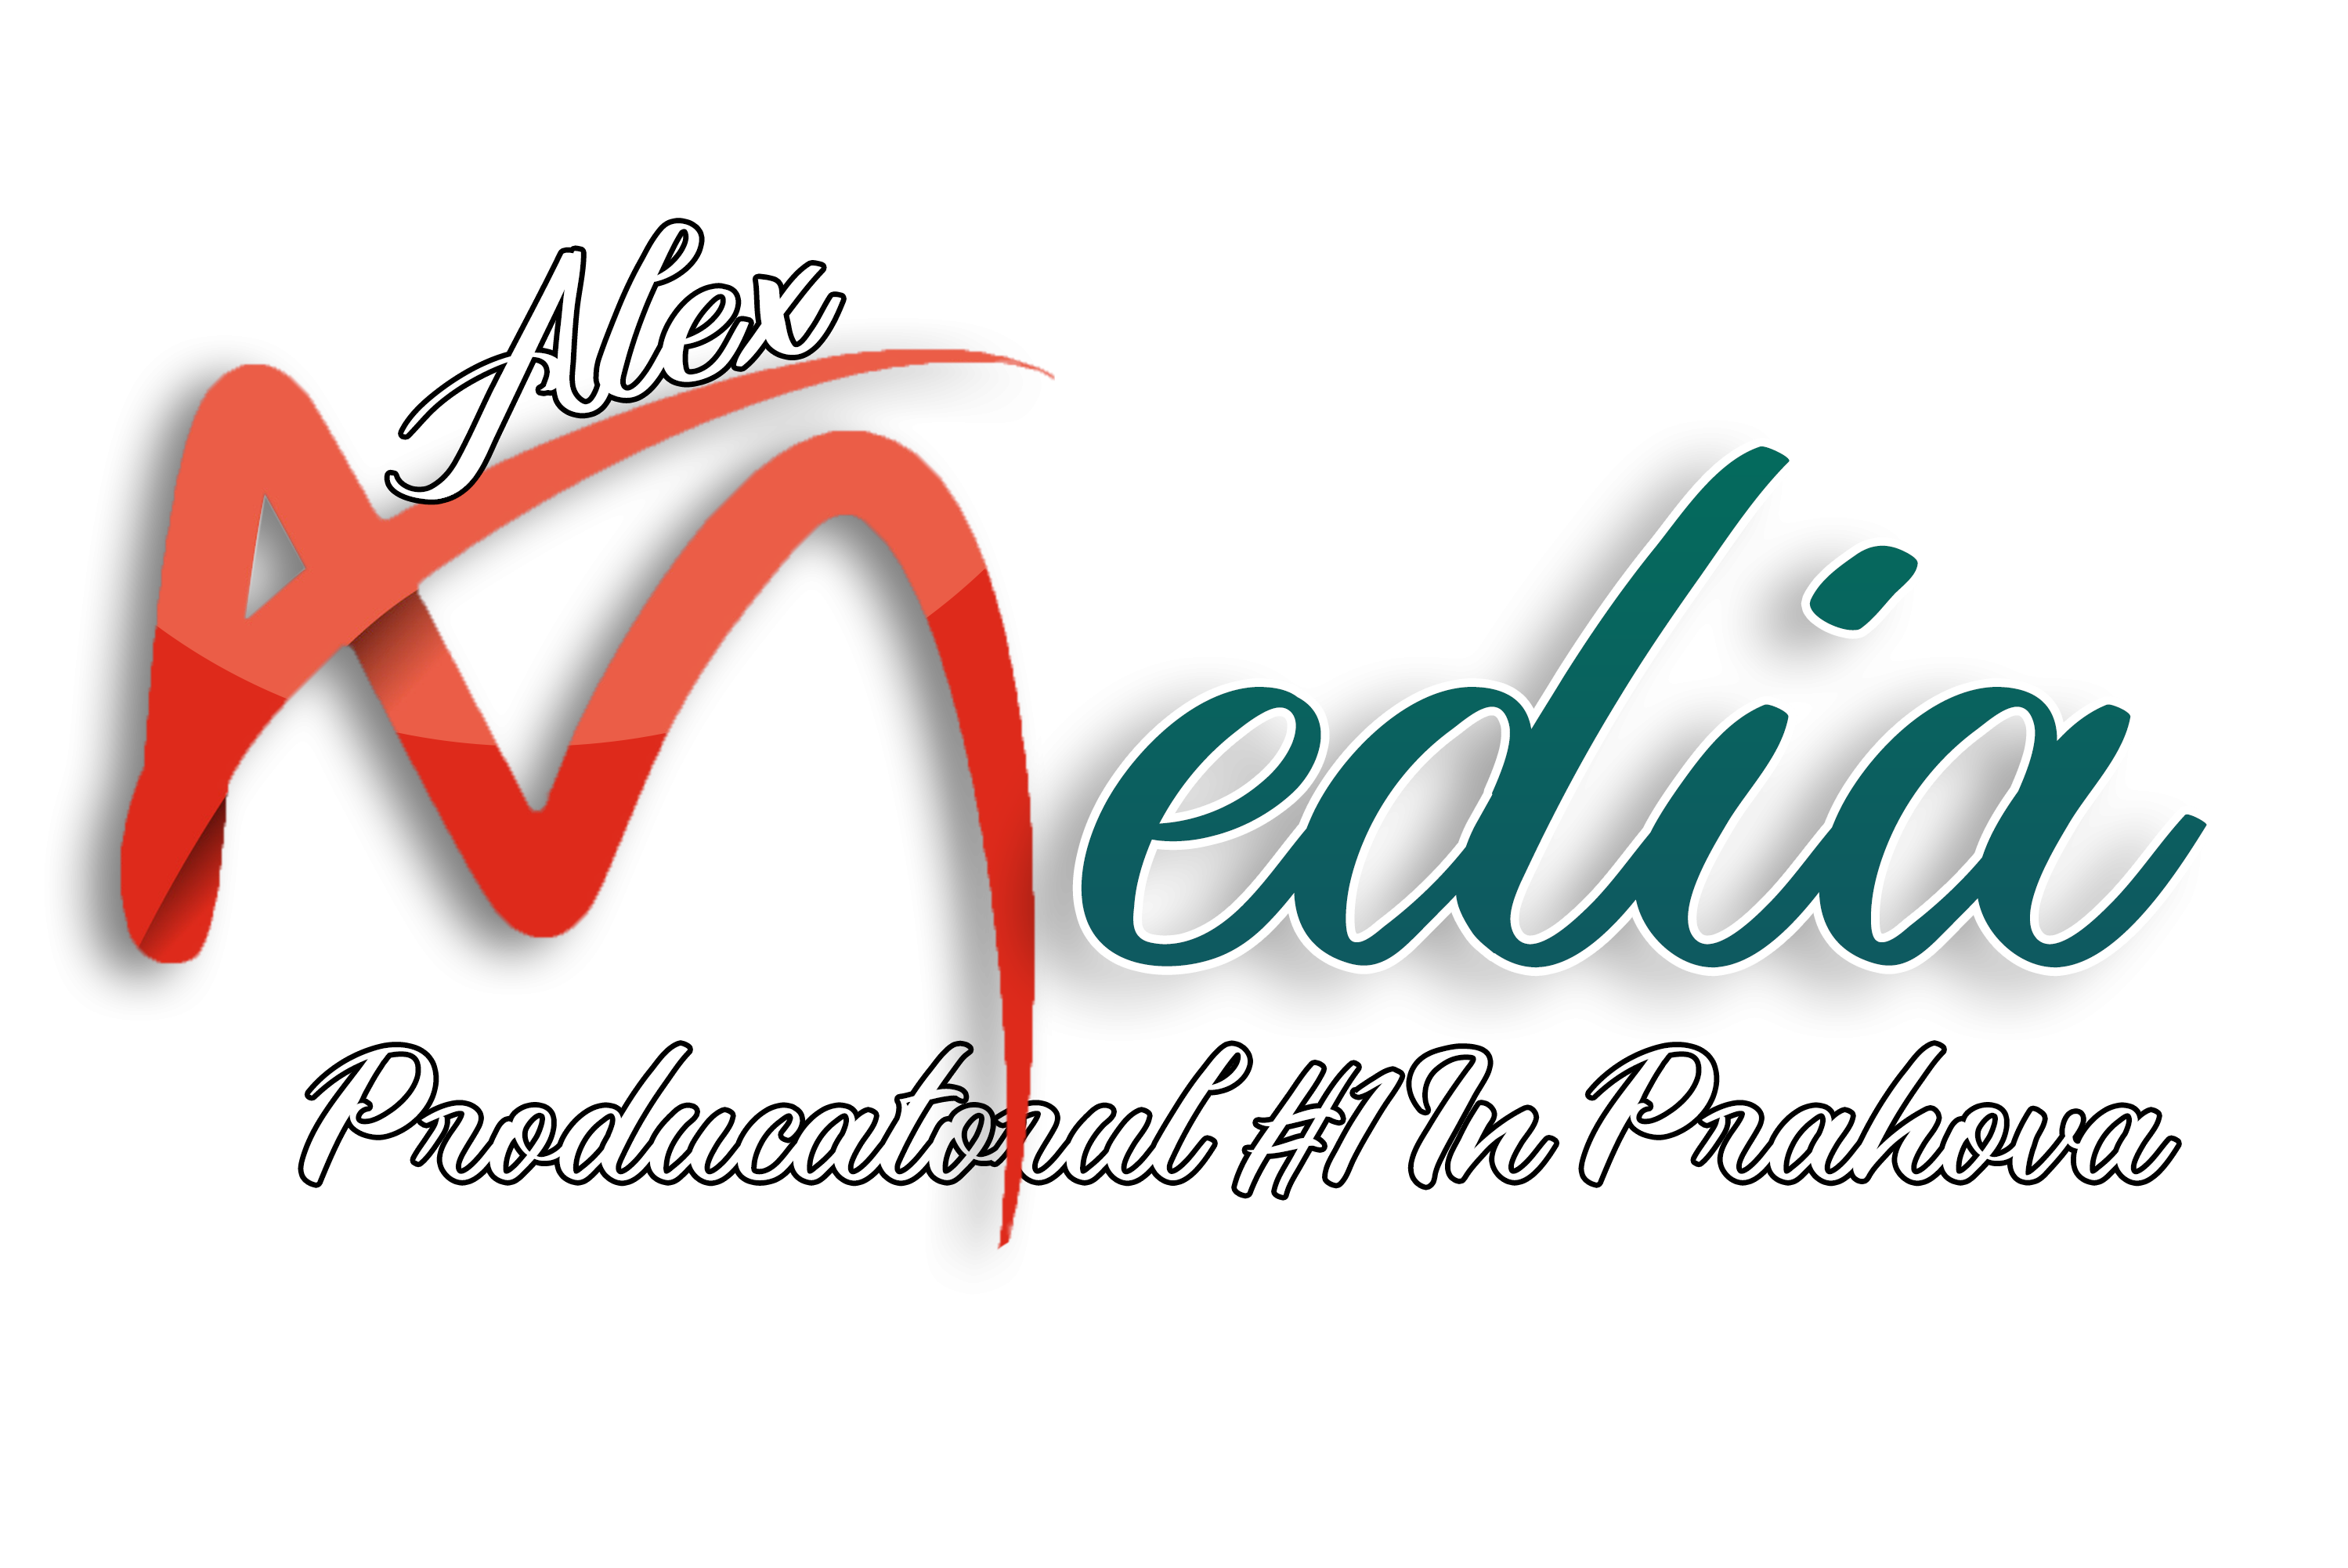 Alex Media Grup